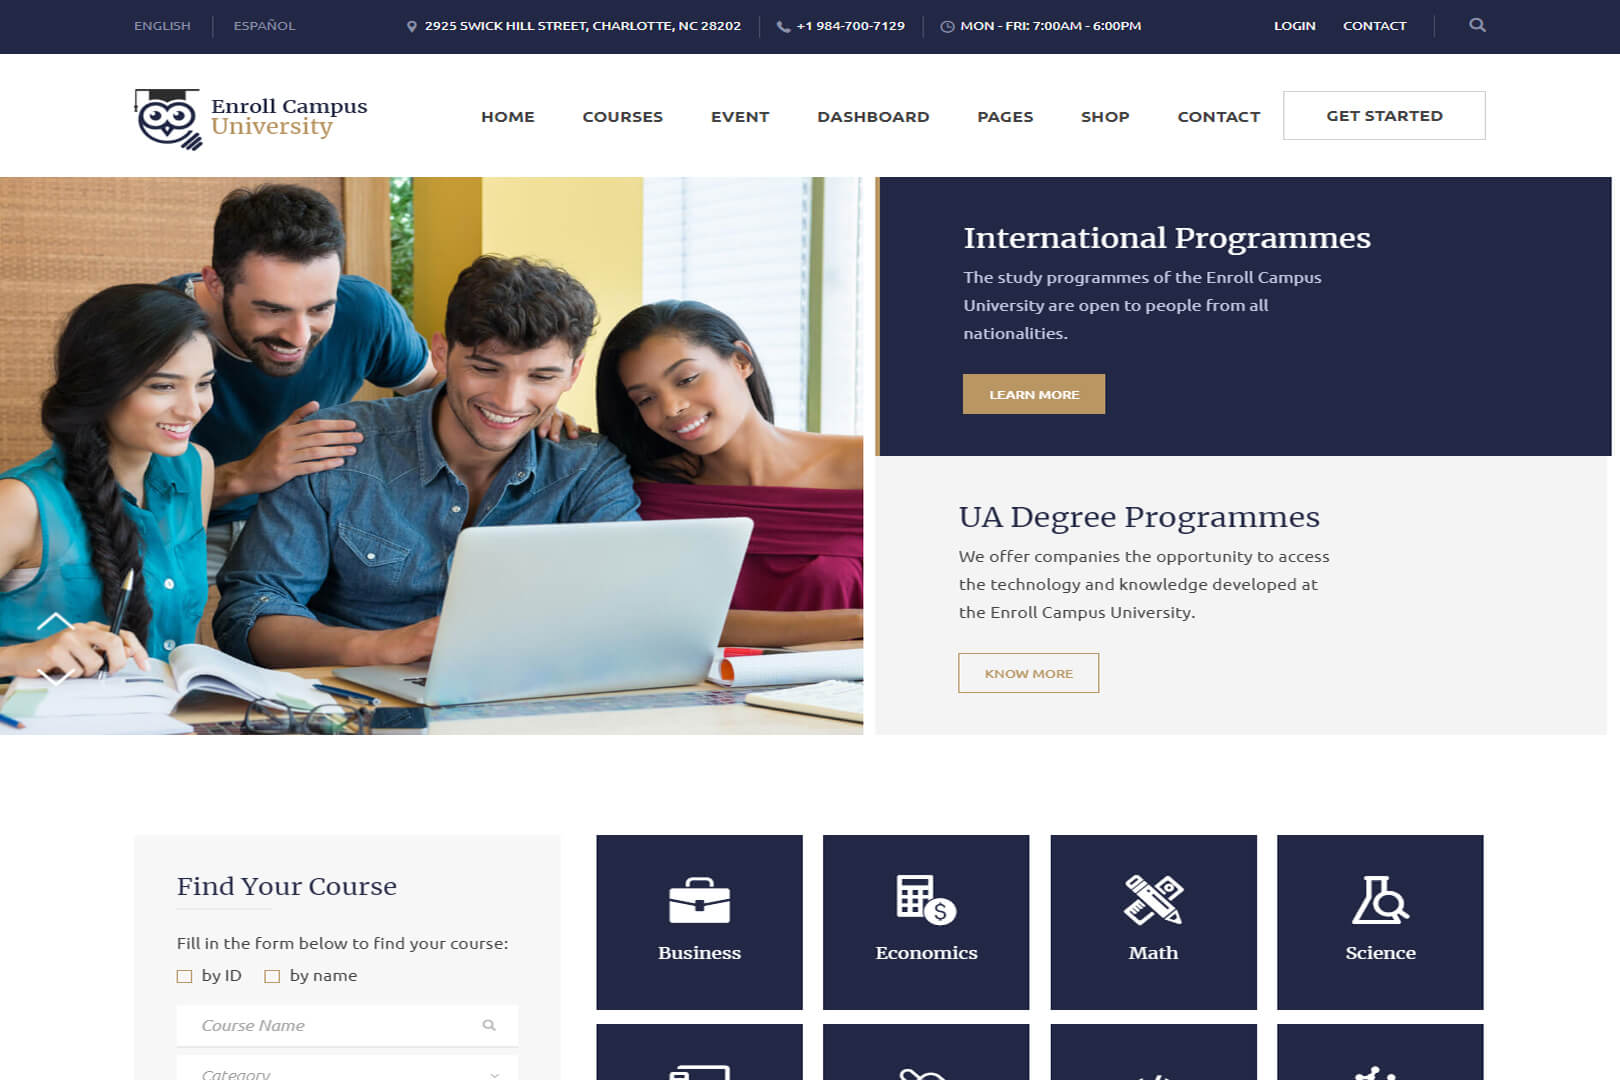 Responsive Free Education Website Templates Templates Hub